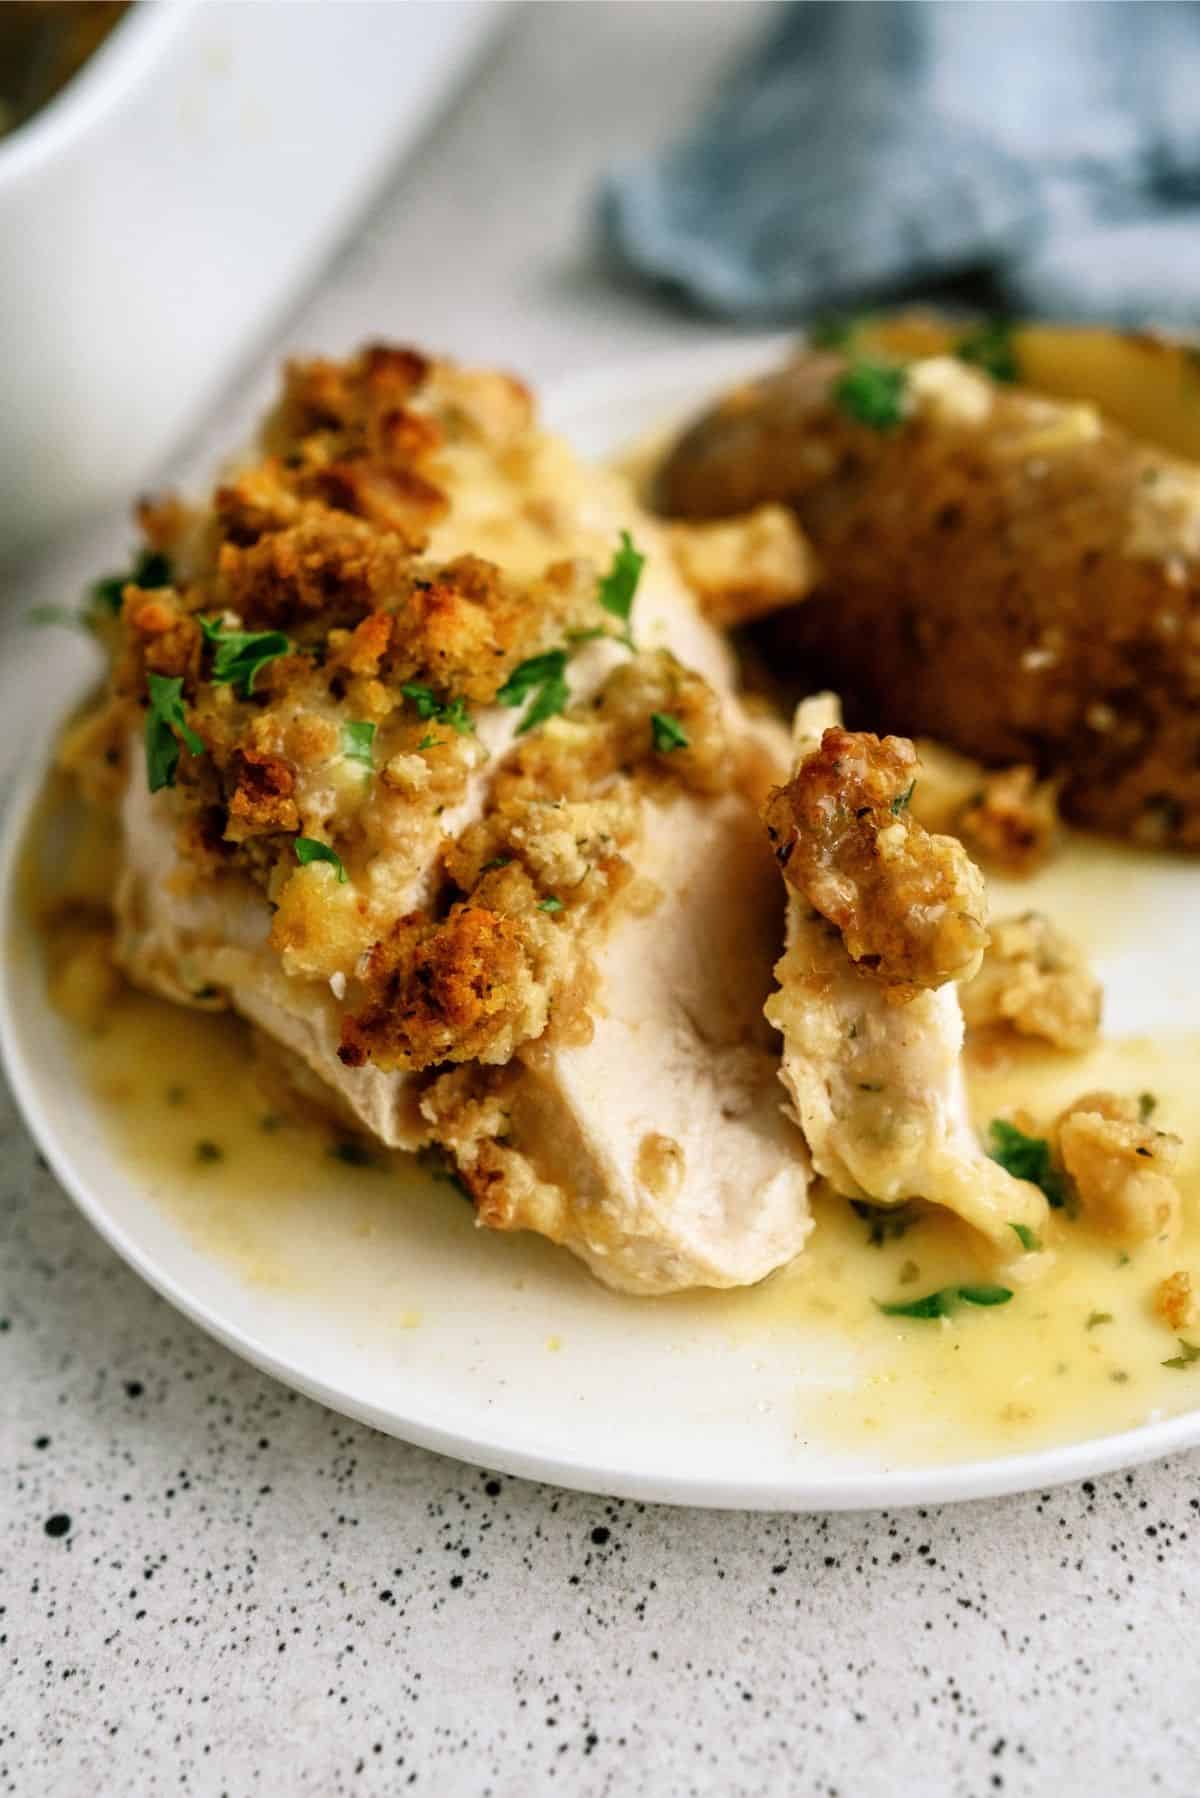 https://www.sixsistersstuff.com/wp-content/uploads/2011/05/Savory-Chicken-and-Stuffing-Bake-2.jpg